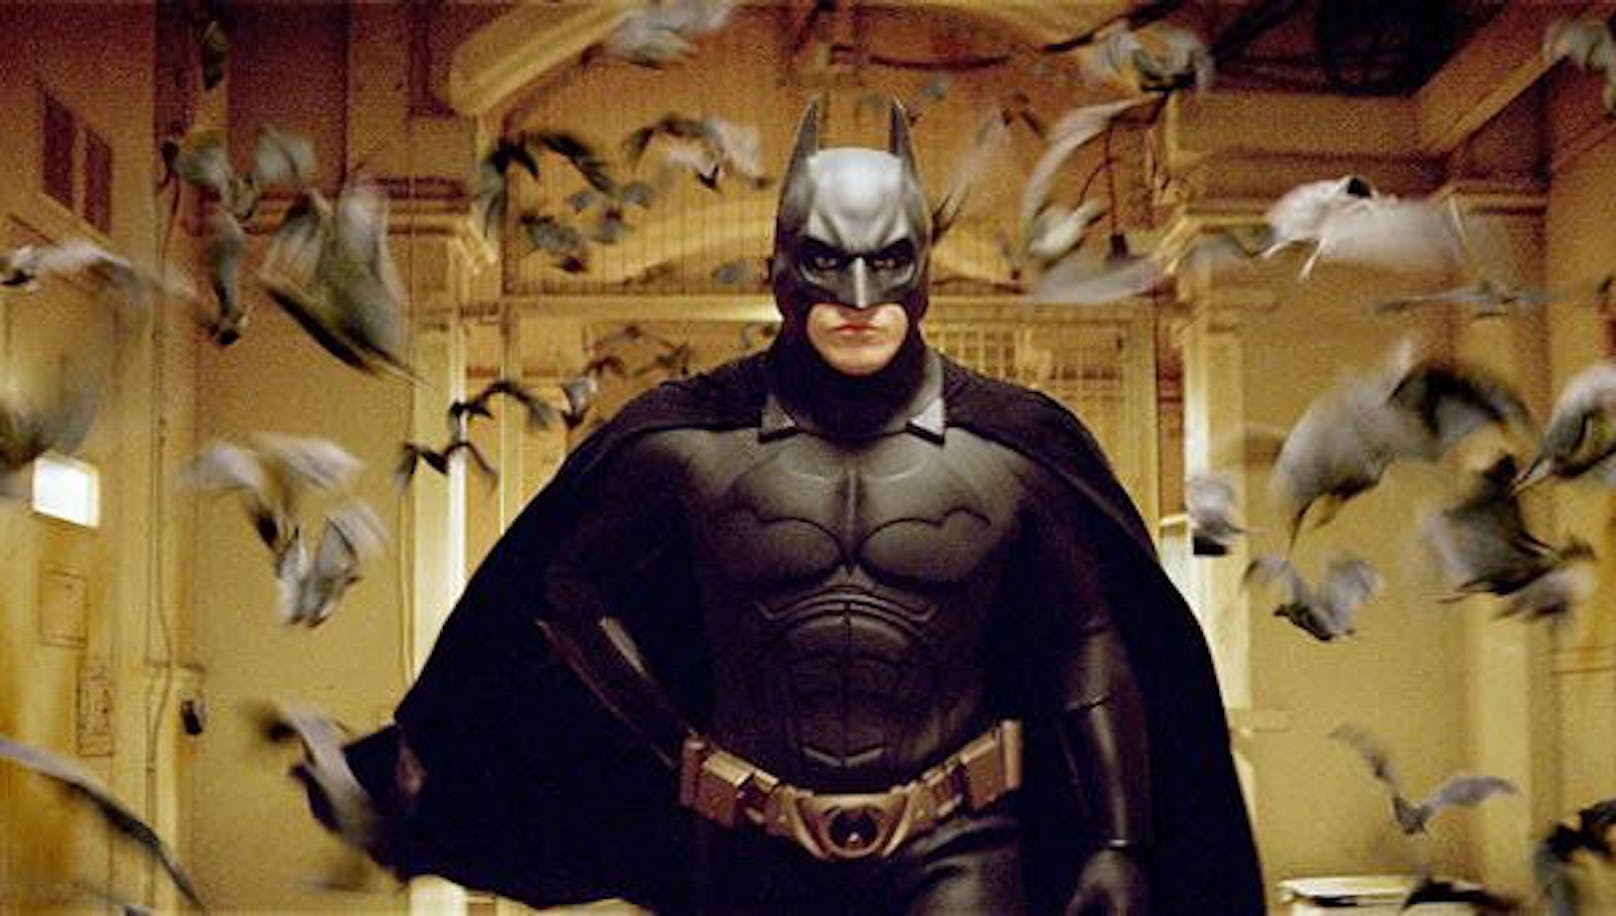 Christian Bale in "Batman Begins"